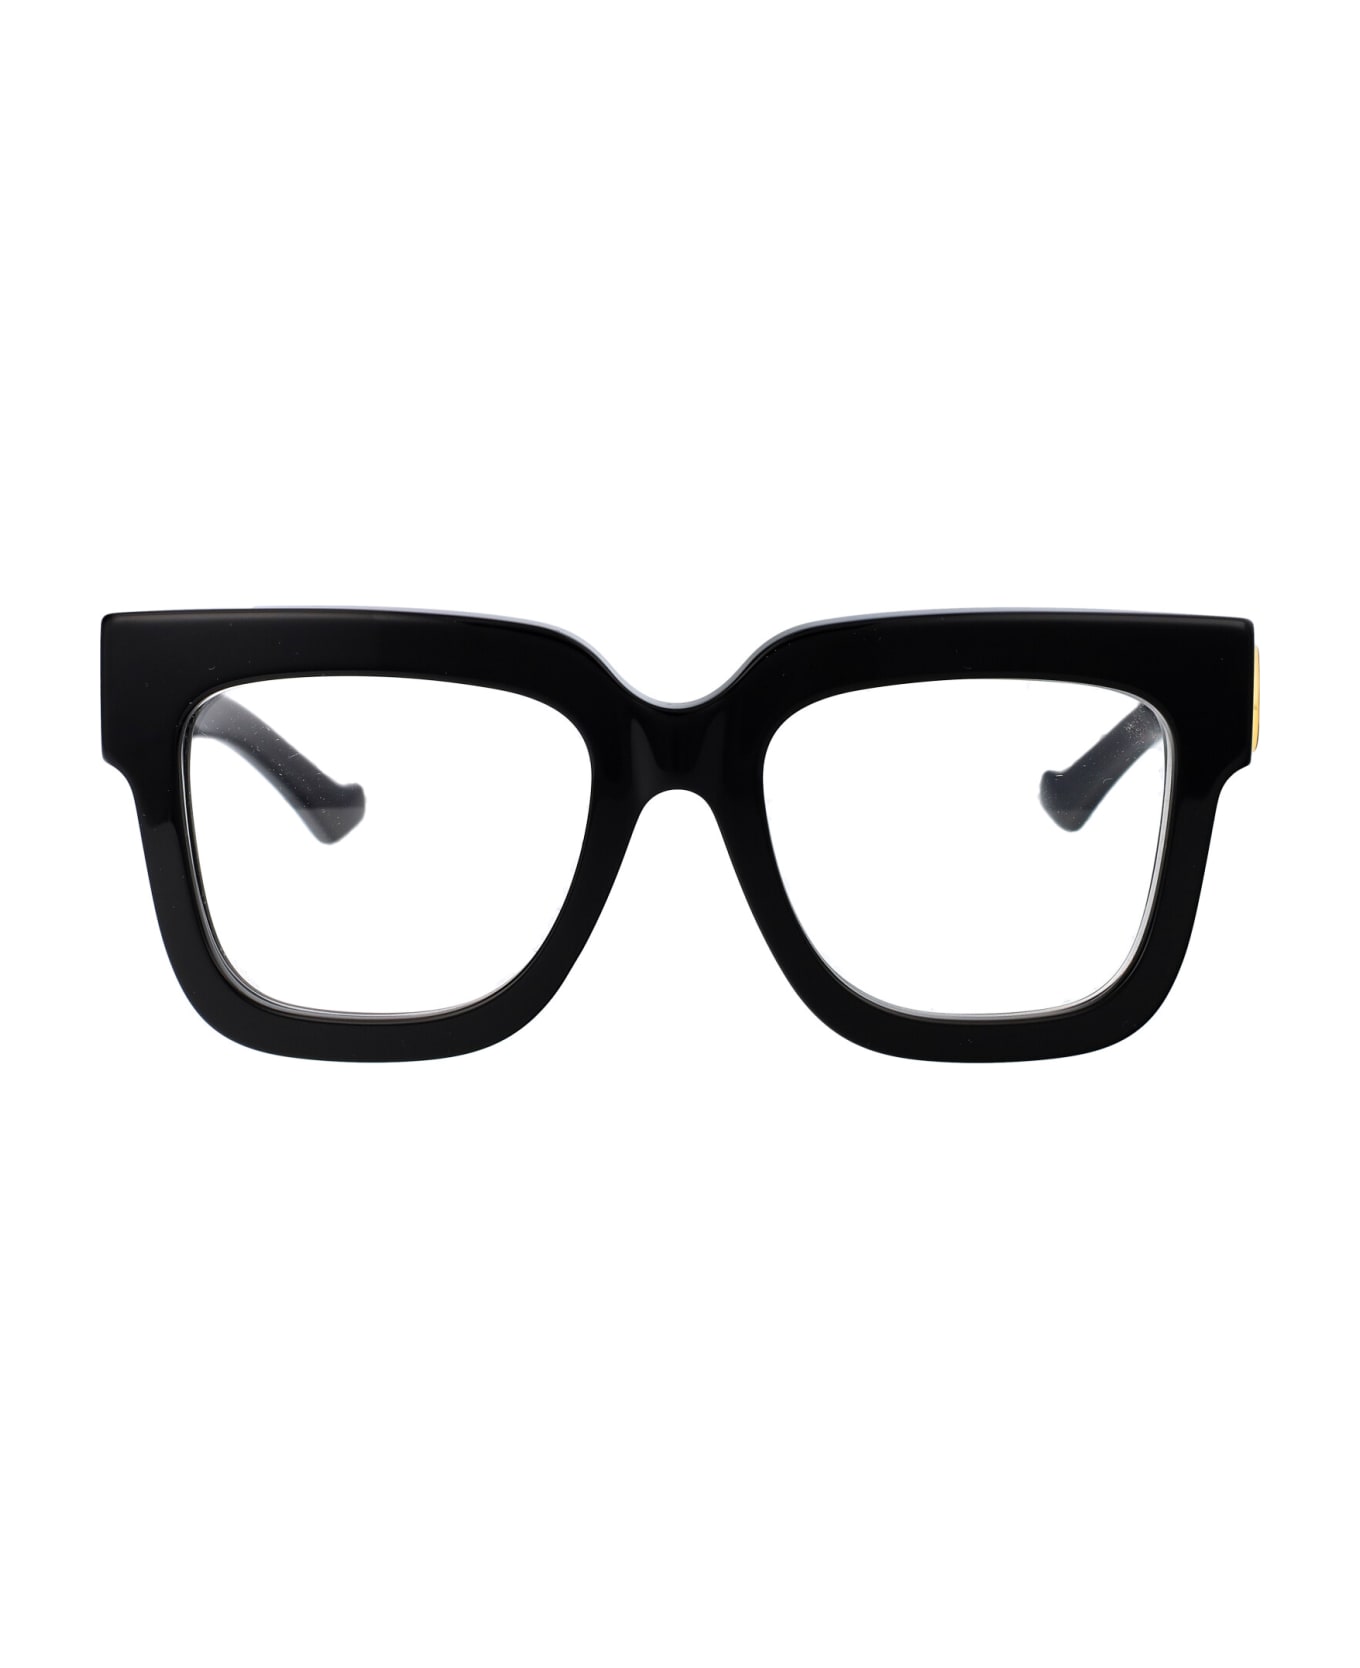 Gucci Eyewear Gg1549o Glasses - 001 BLACK BLACK TRANSPARENT